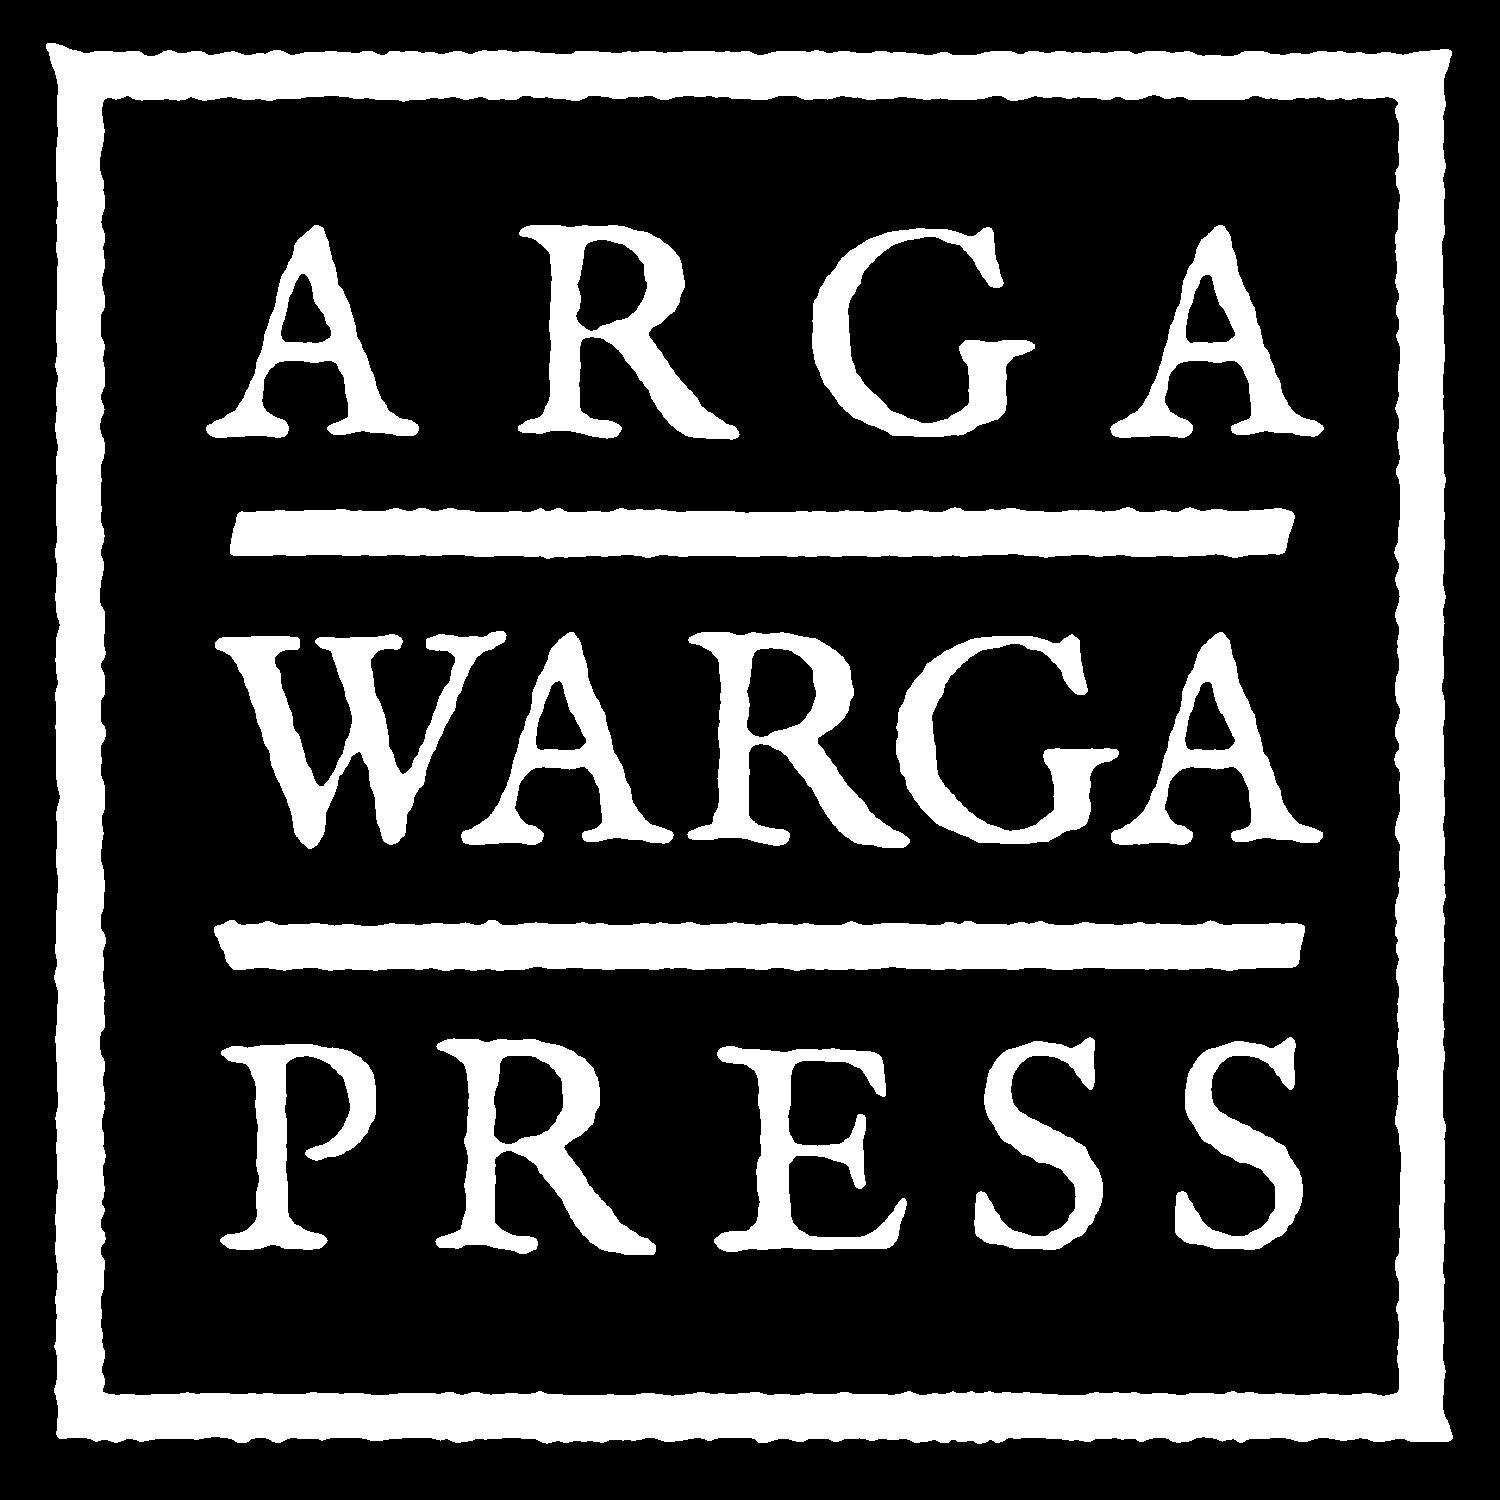 Argawarga Press Logo.jpg